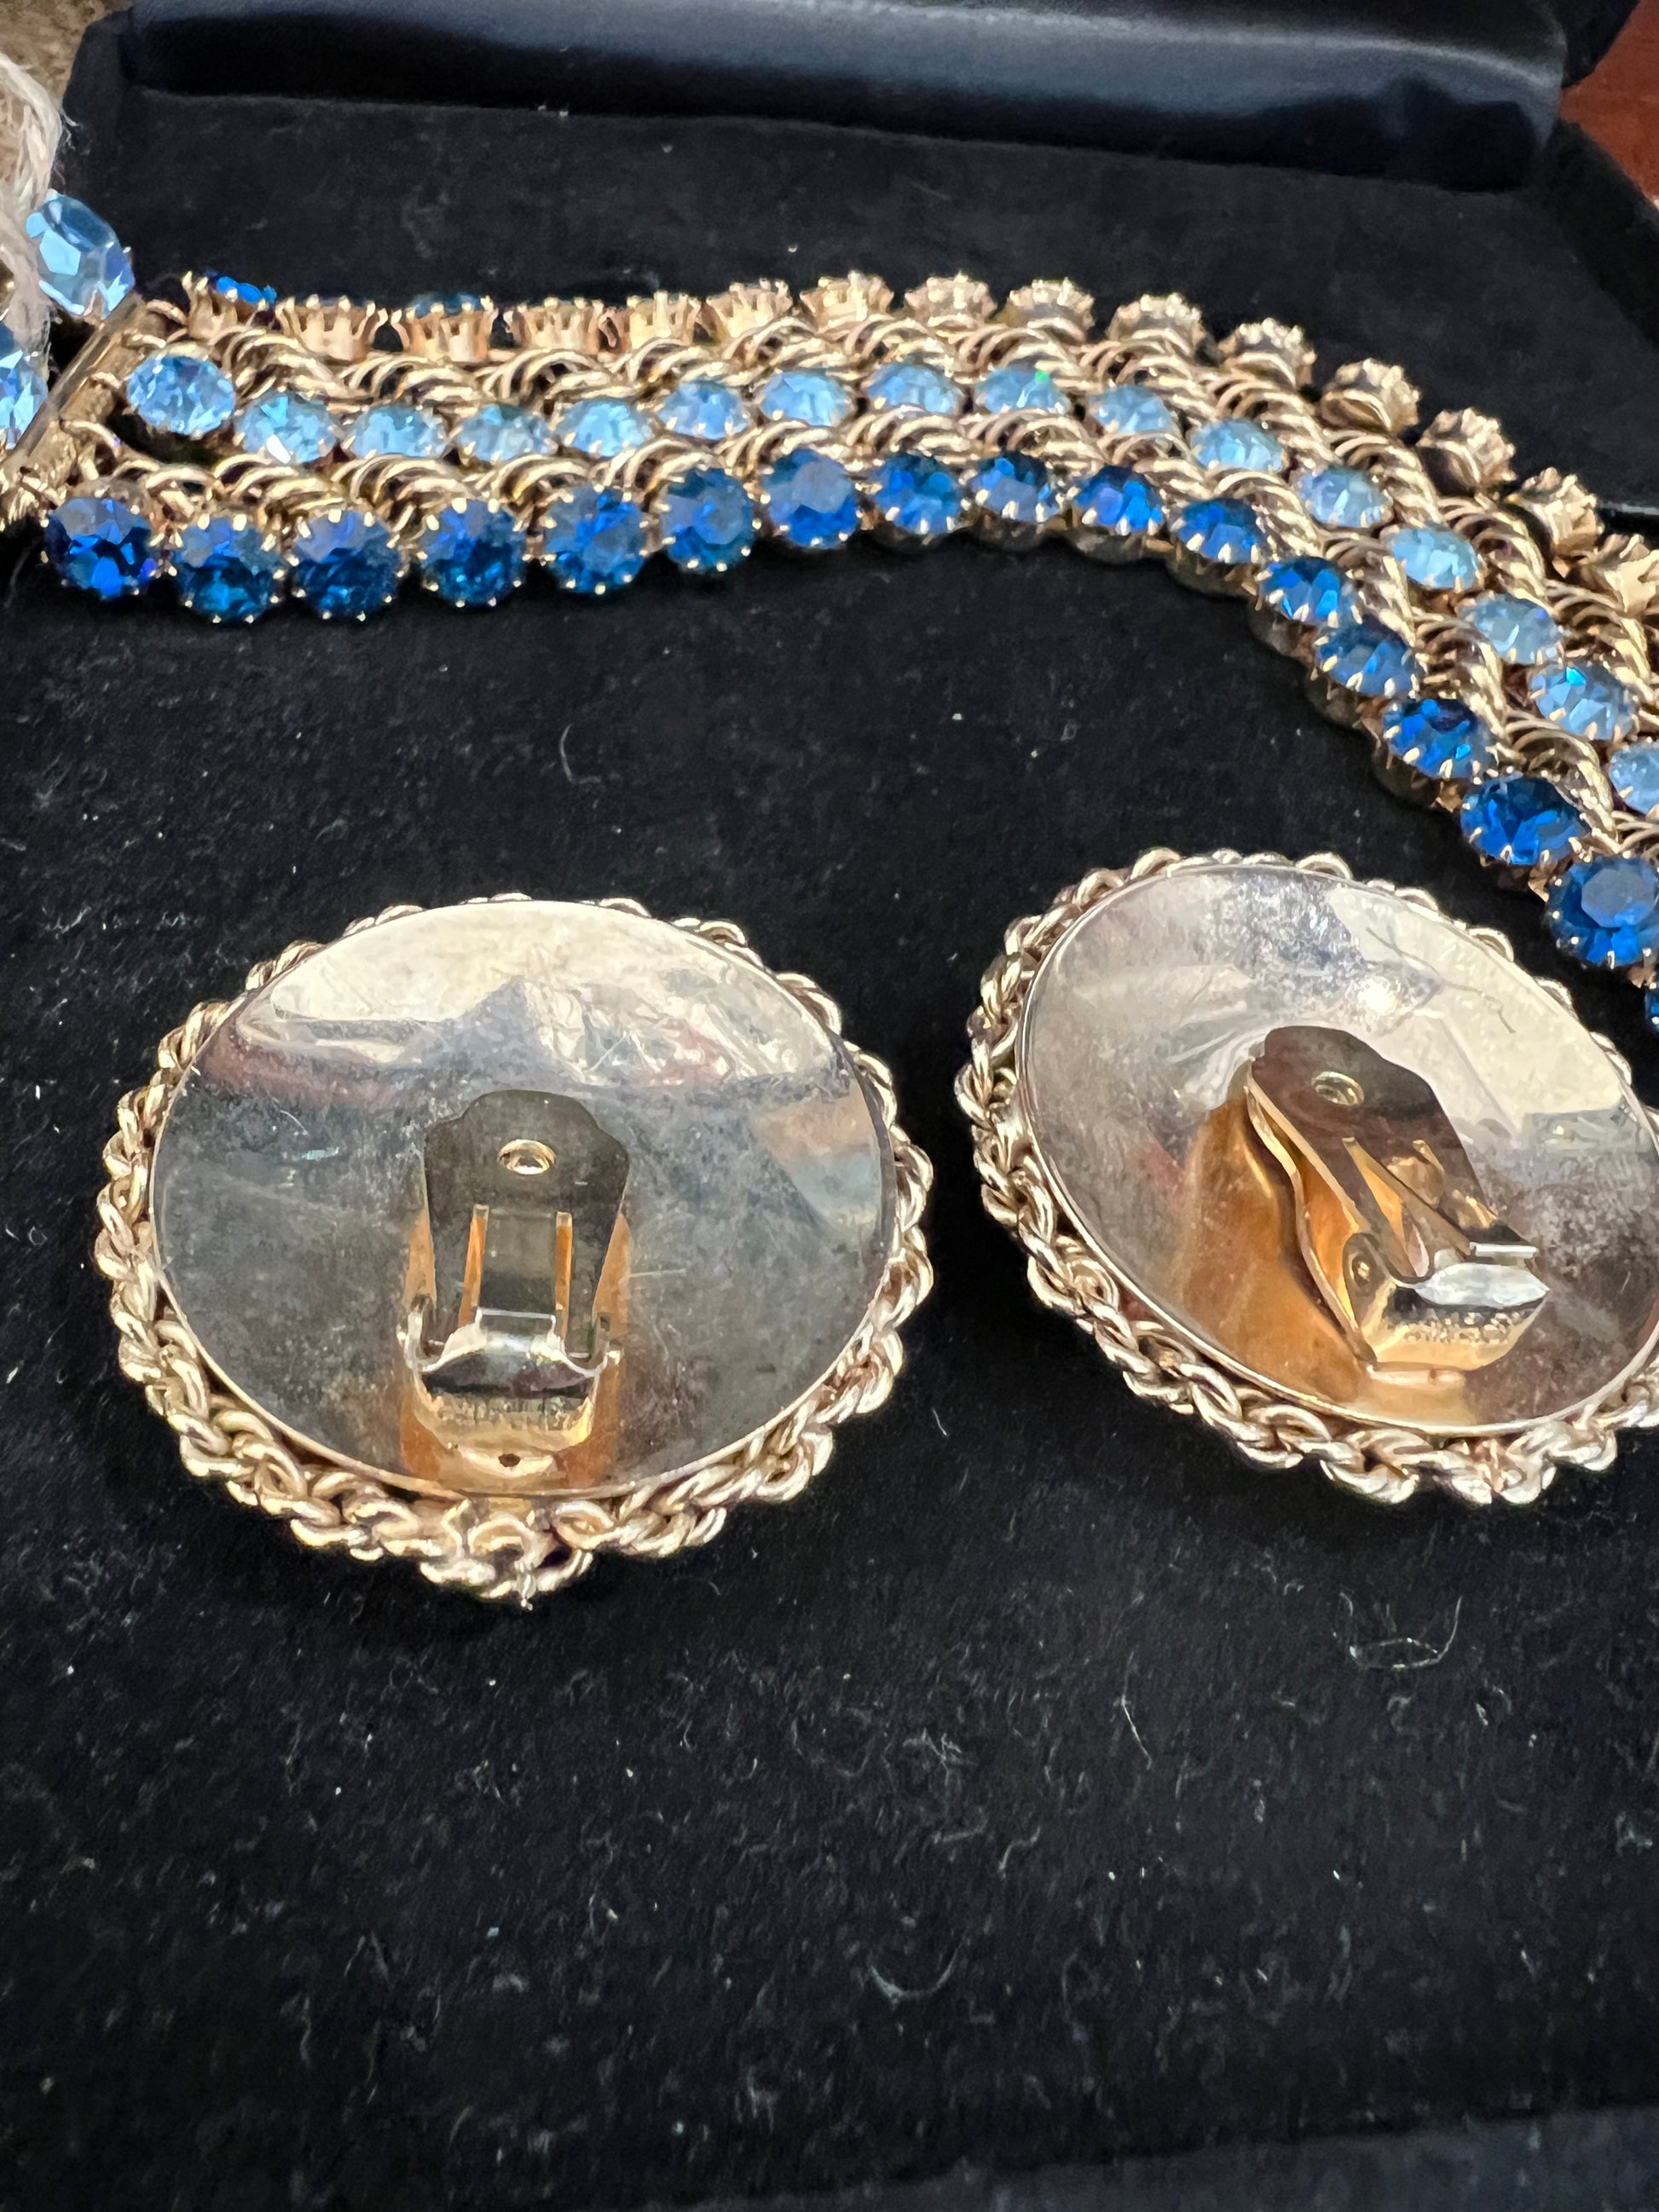 5 Strand Vintage Bracelet & Earring Set Marked Napier